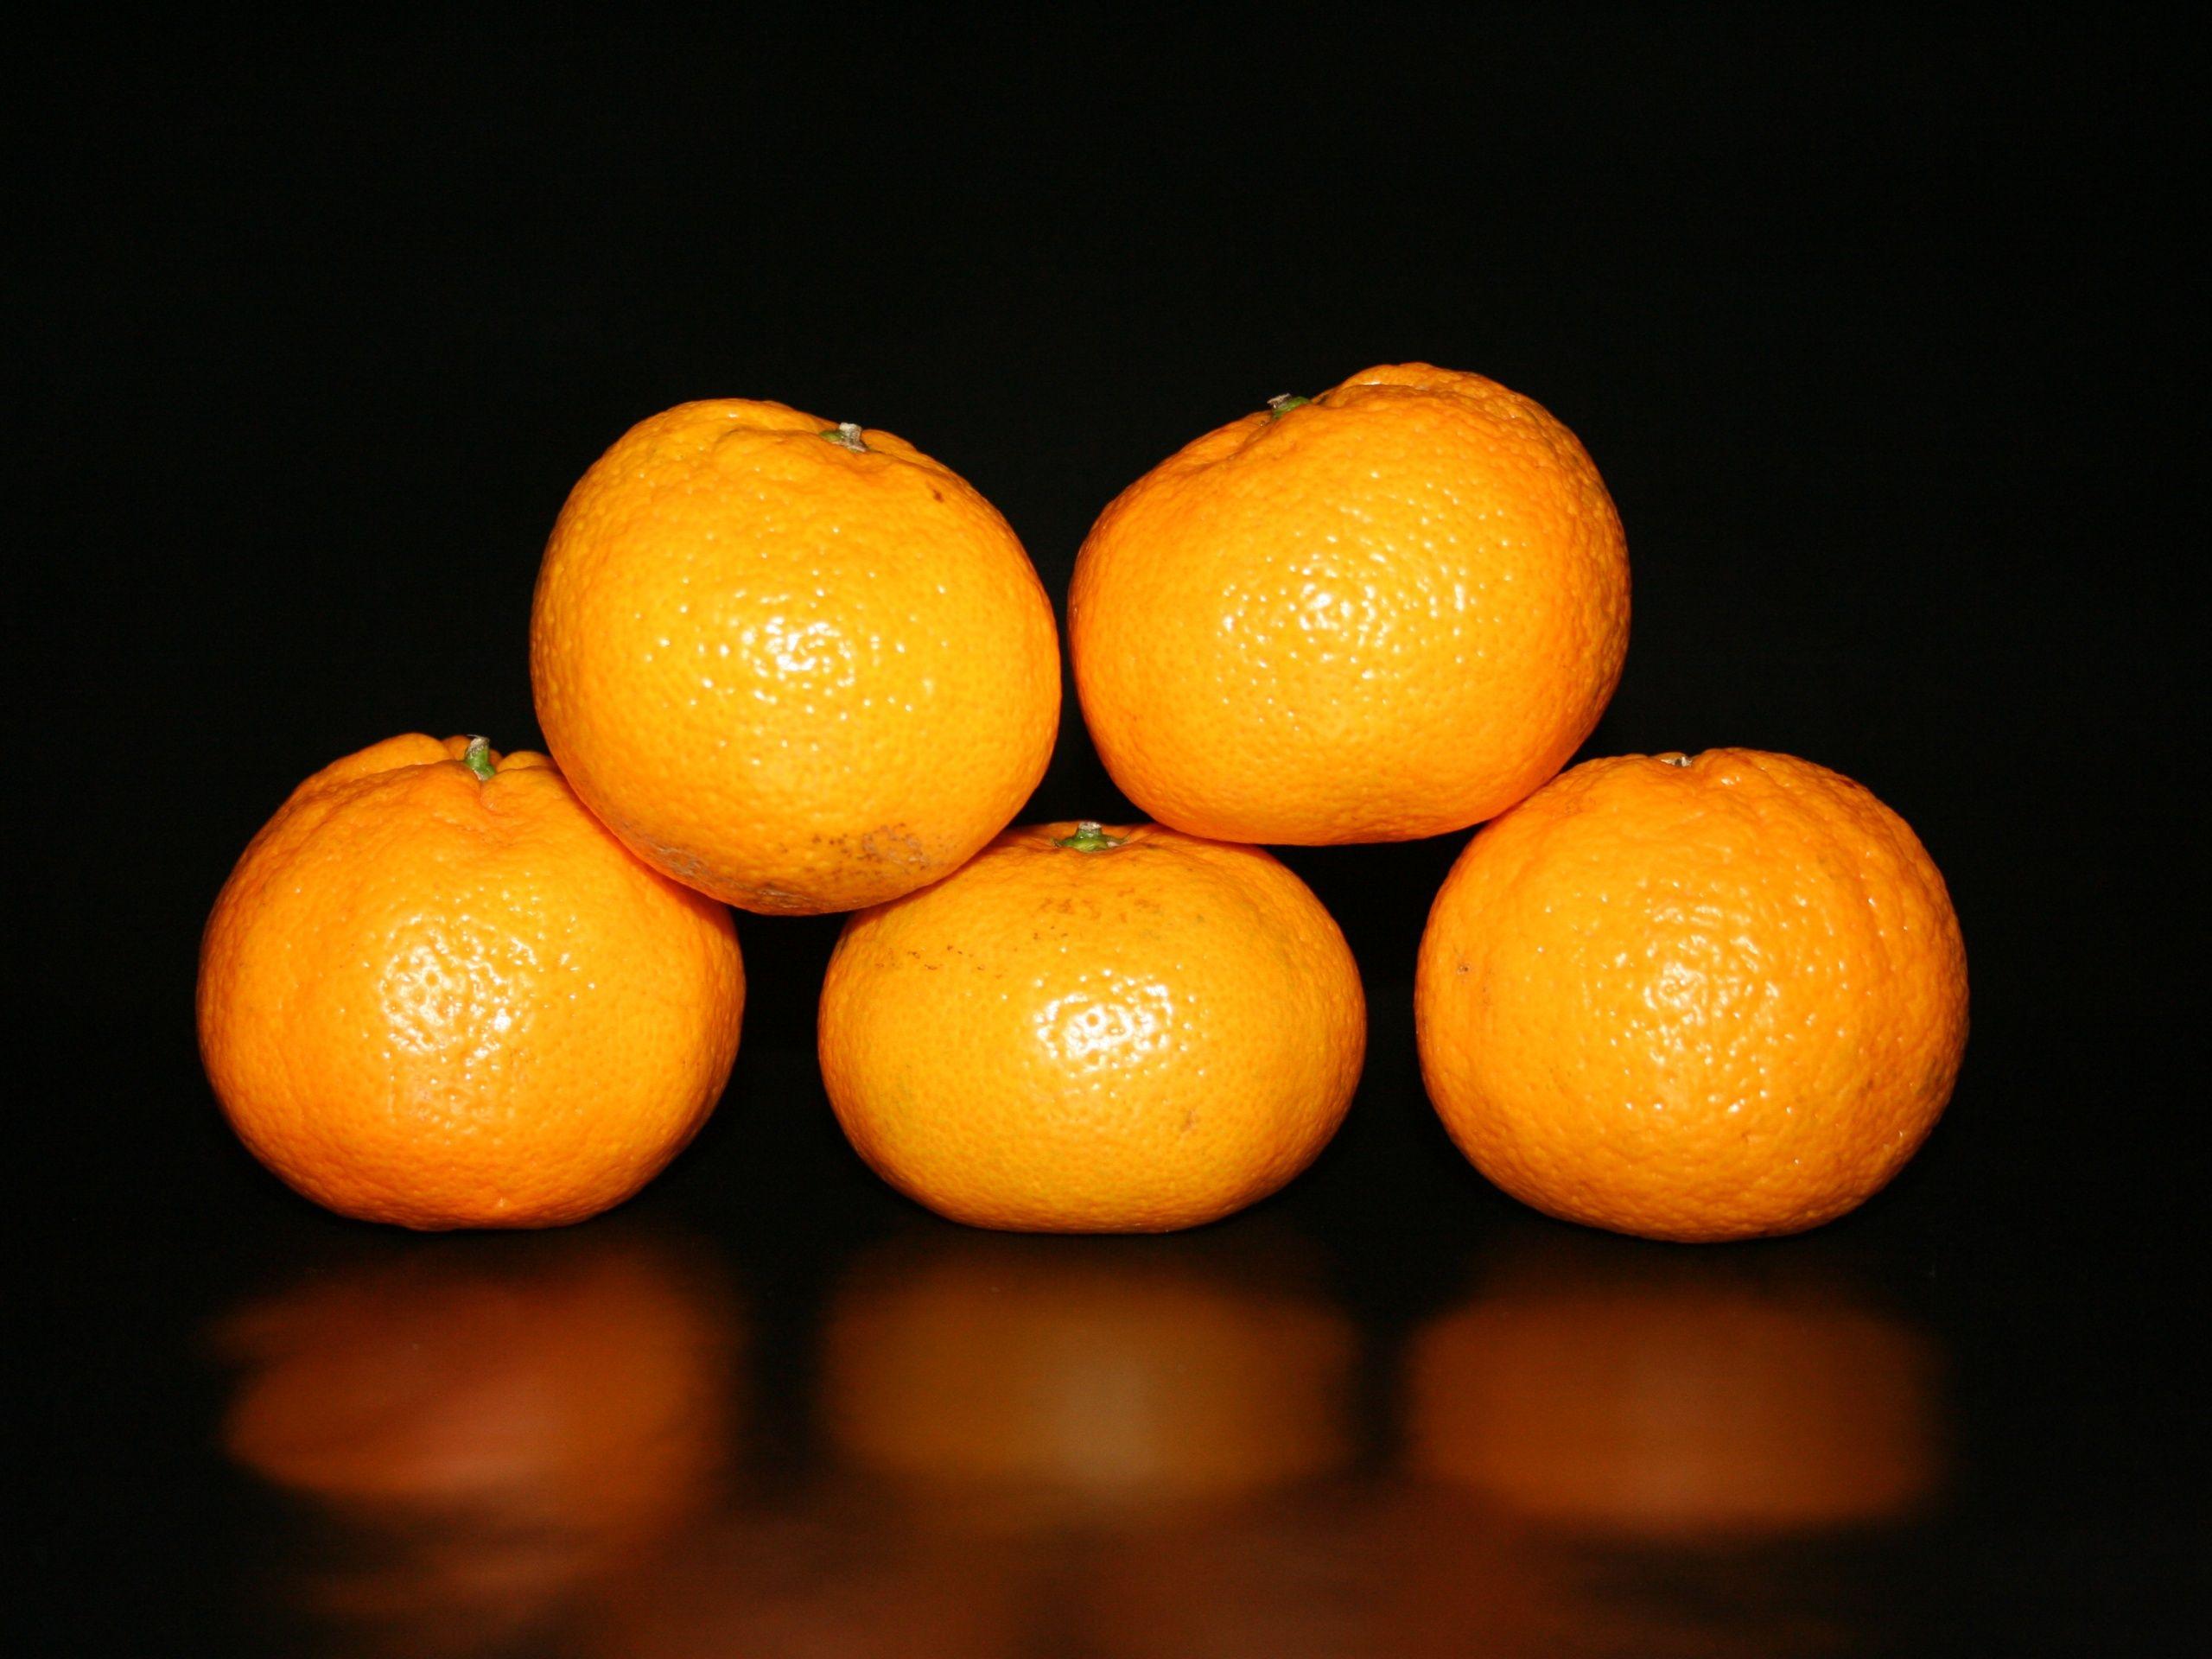 Five oranges wallpaper. Five oranges